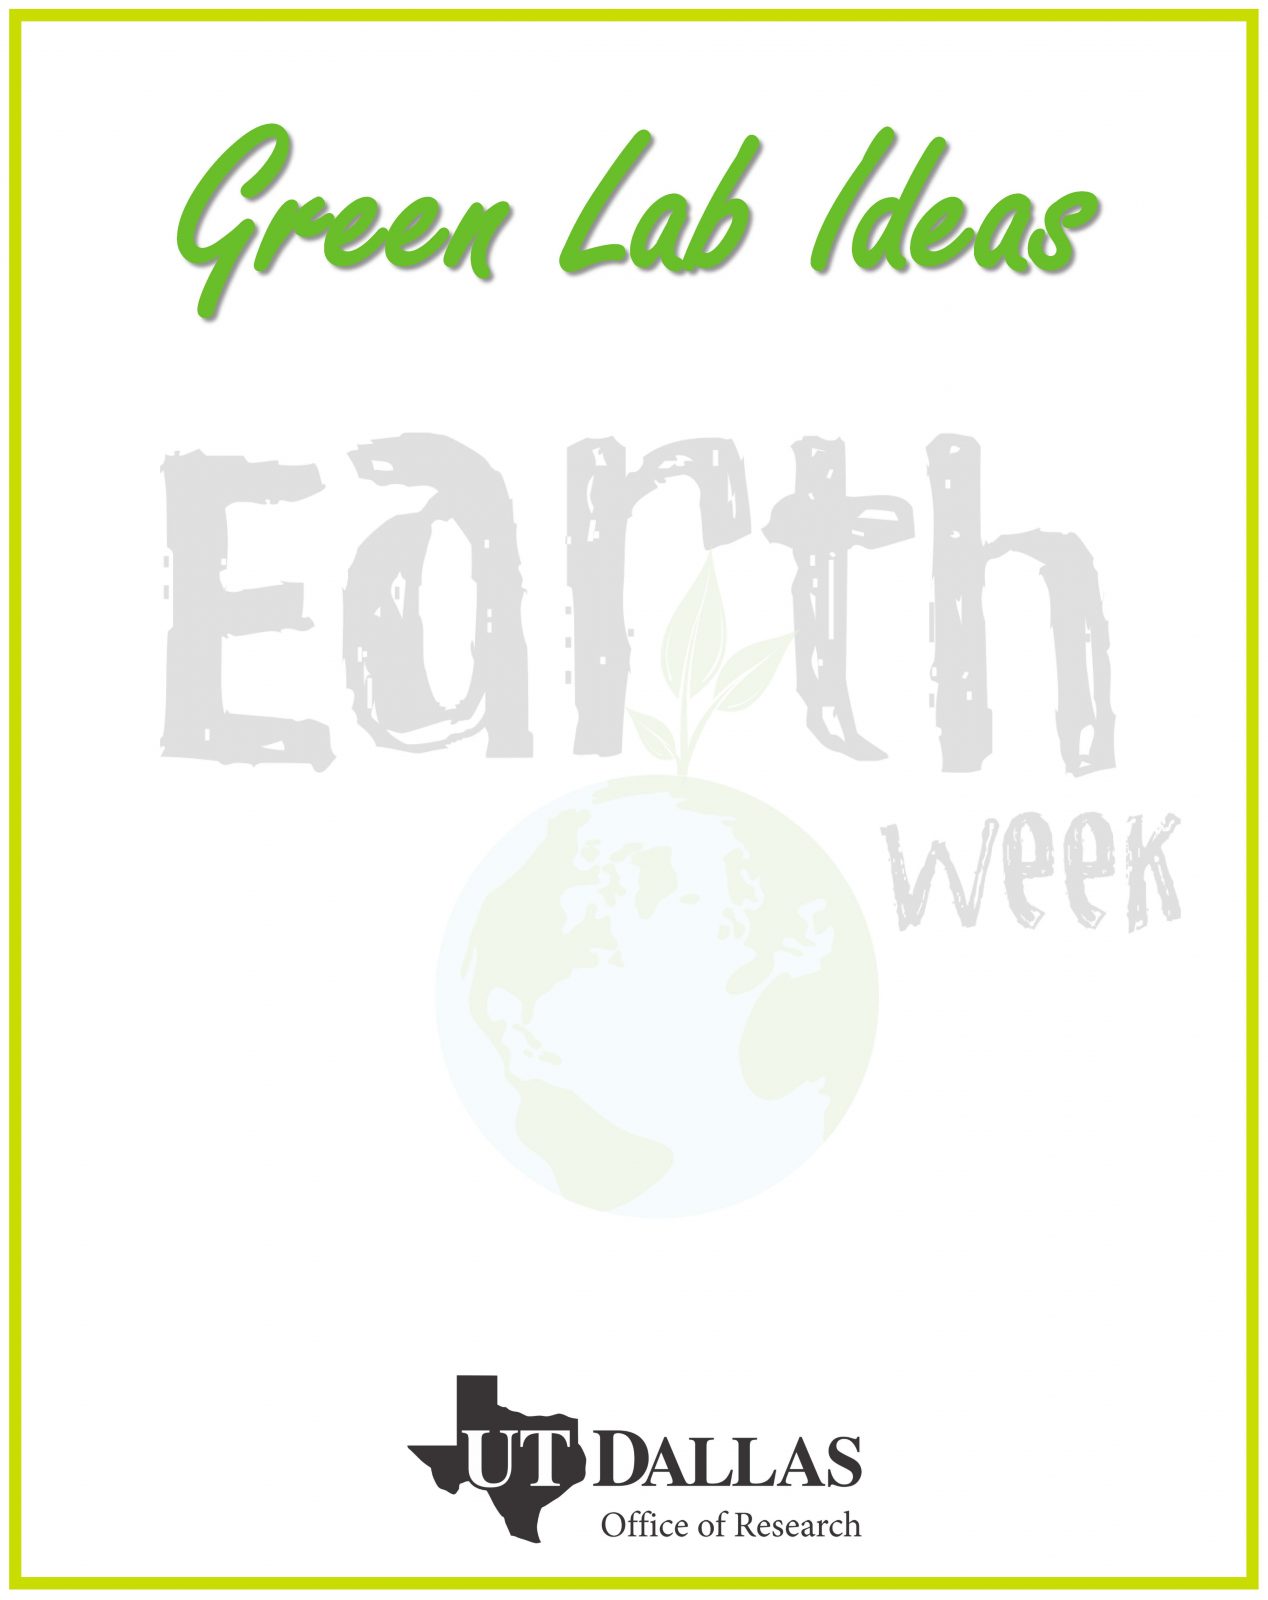 Earth Week Poster